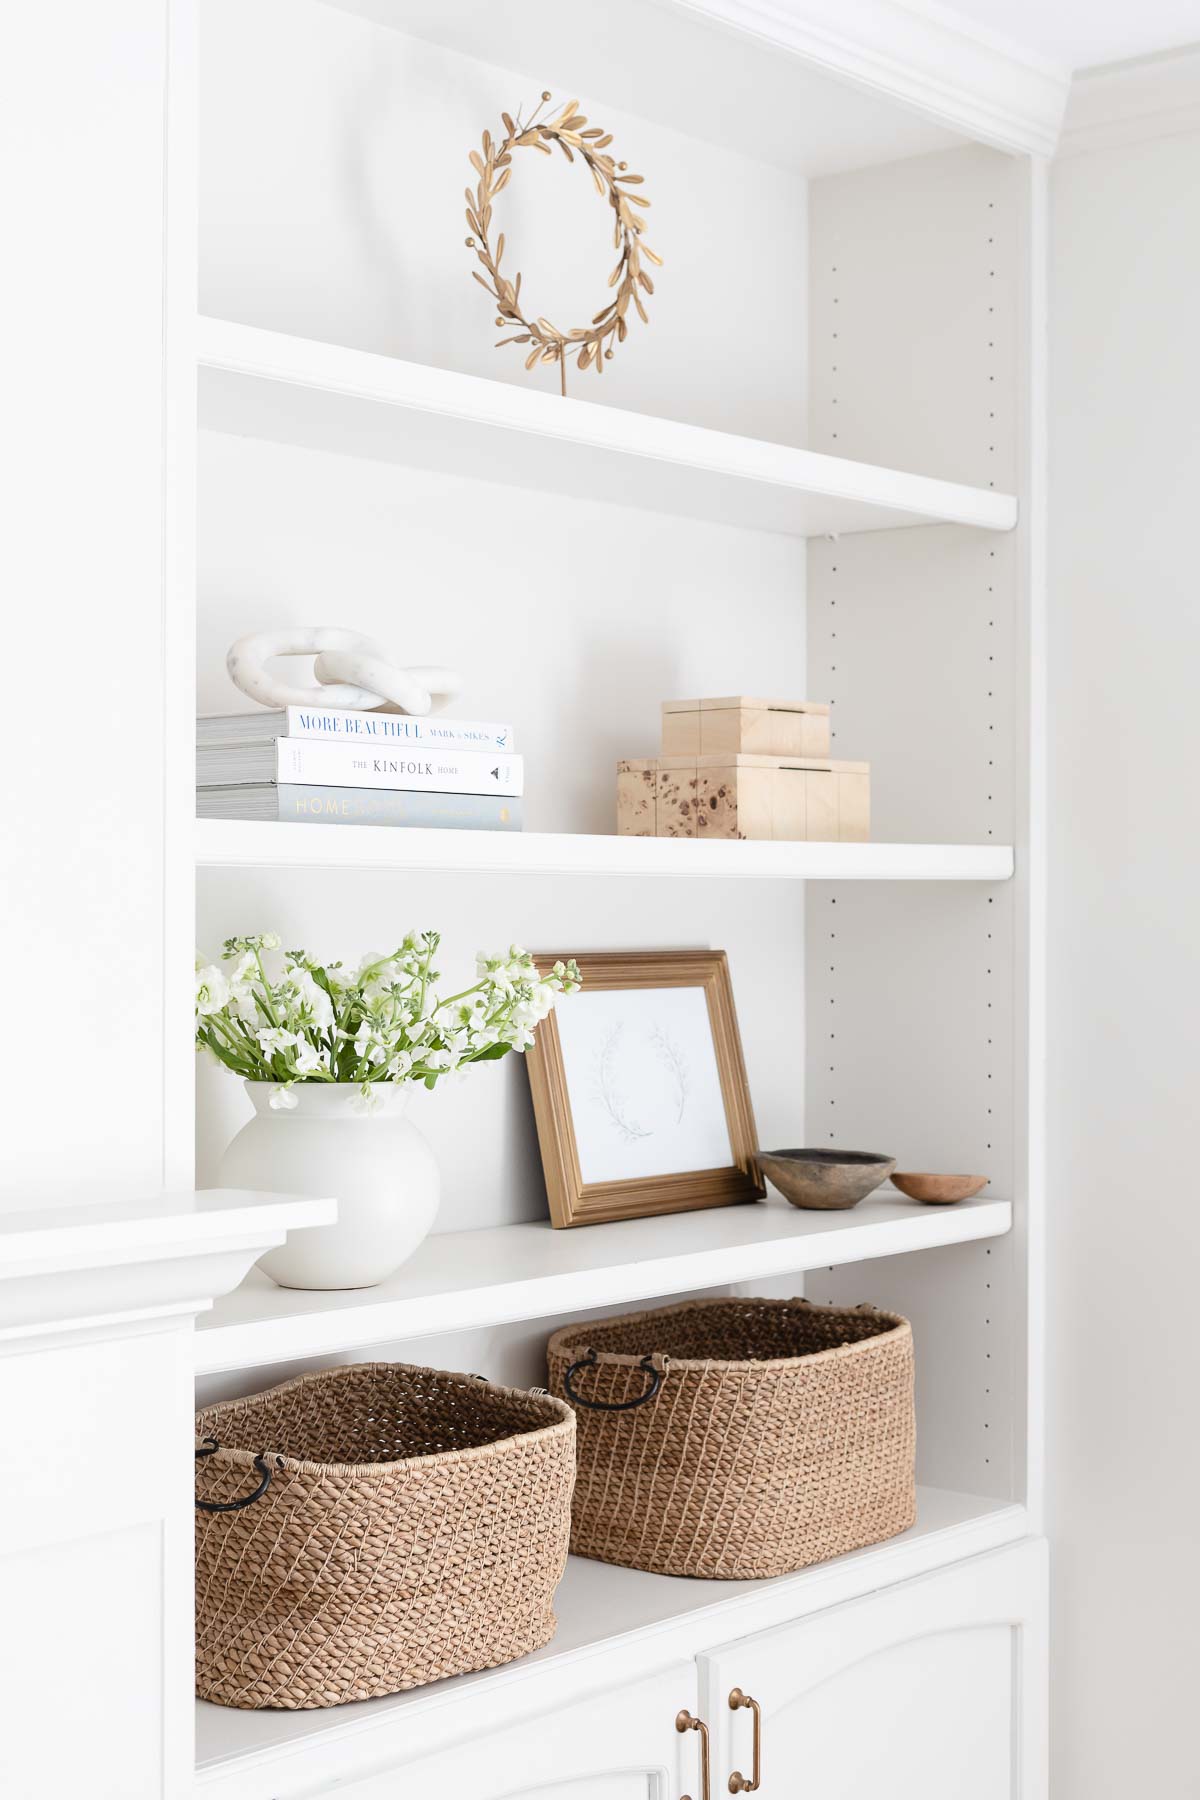 White built in bookshelves with minimalist decor.